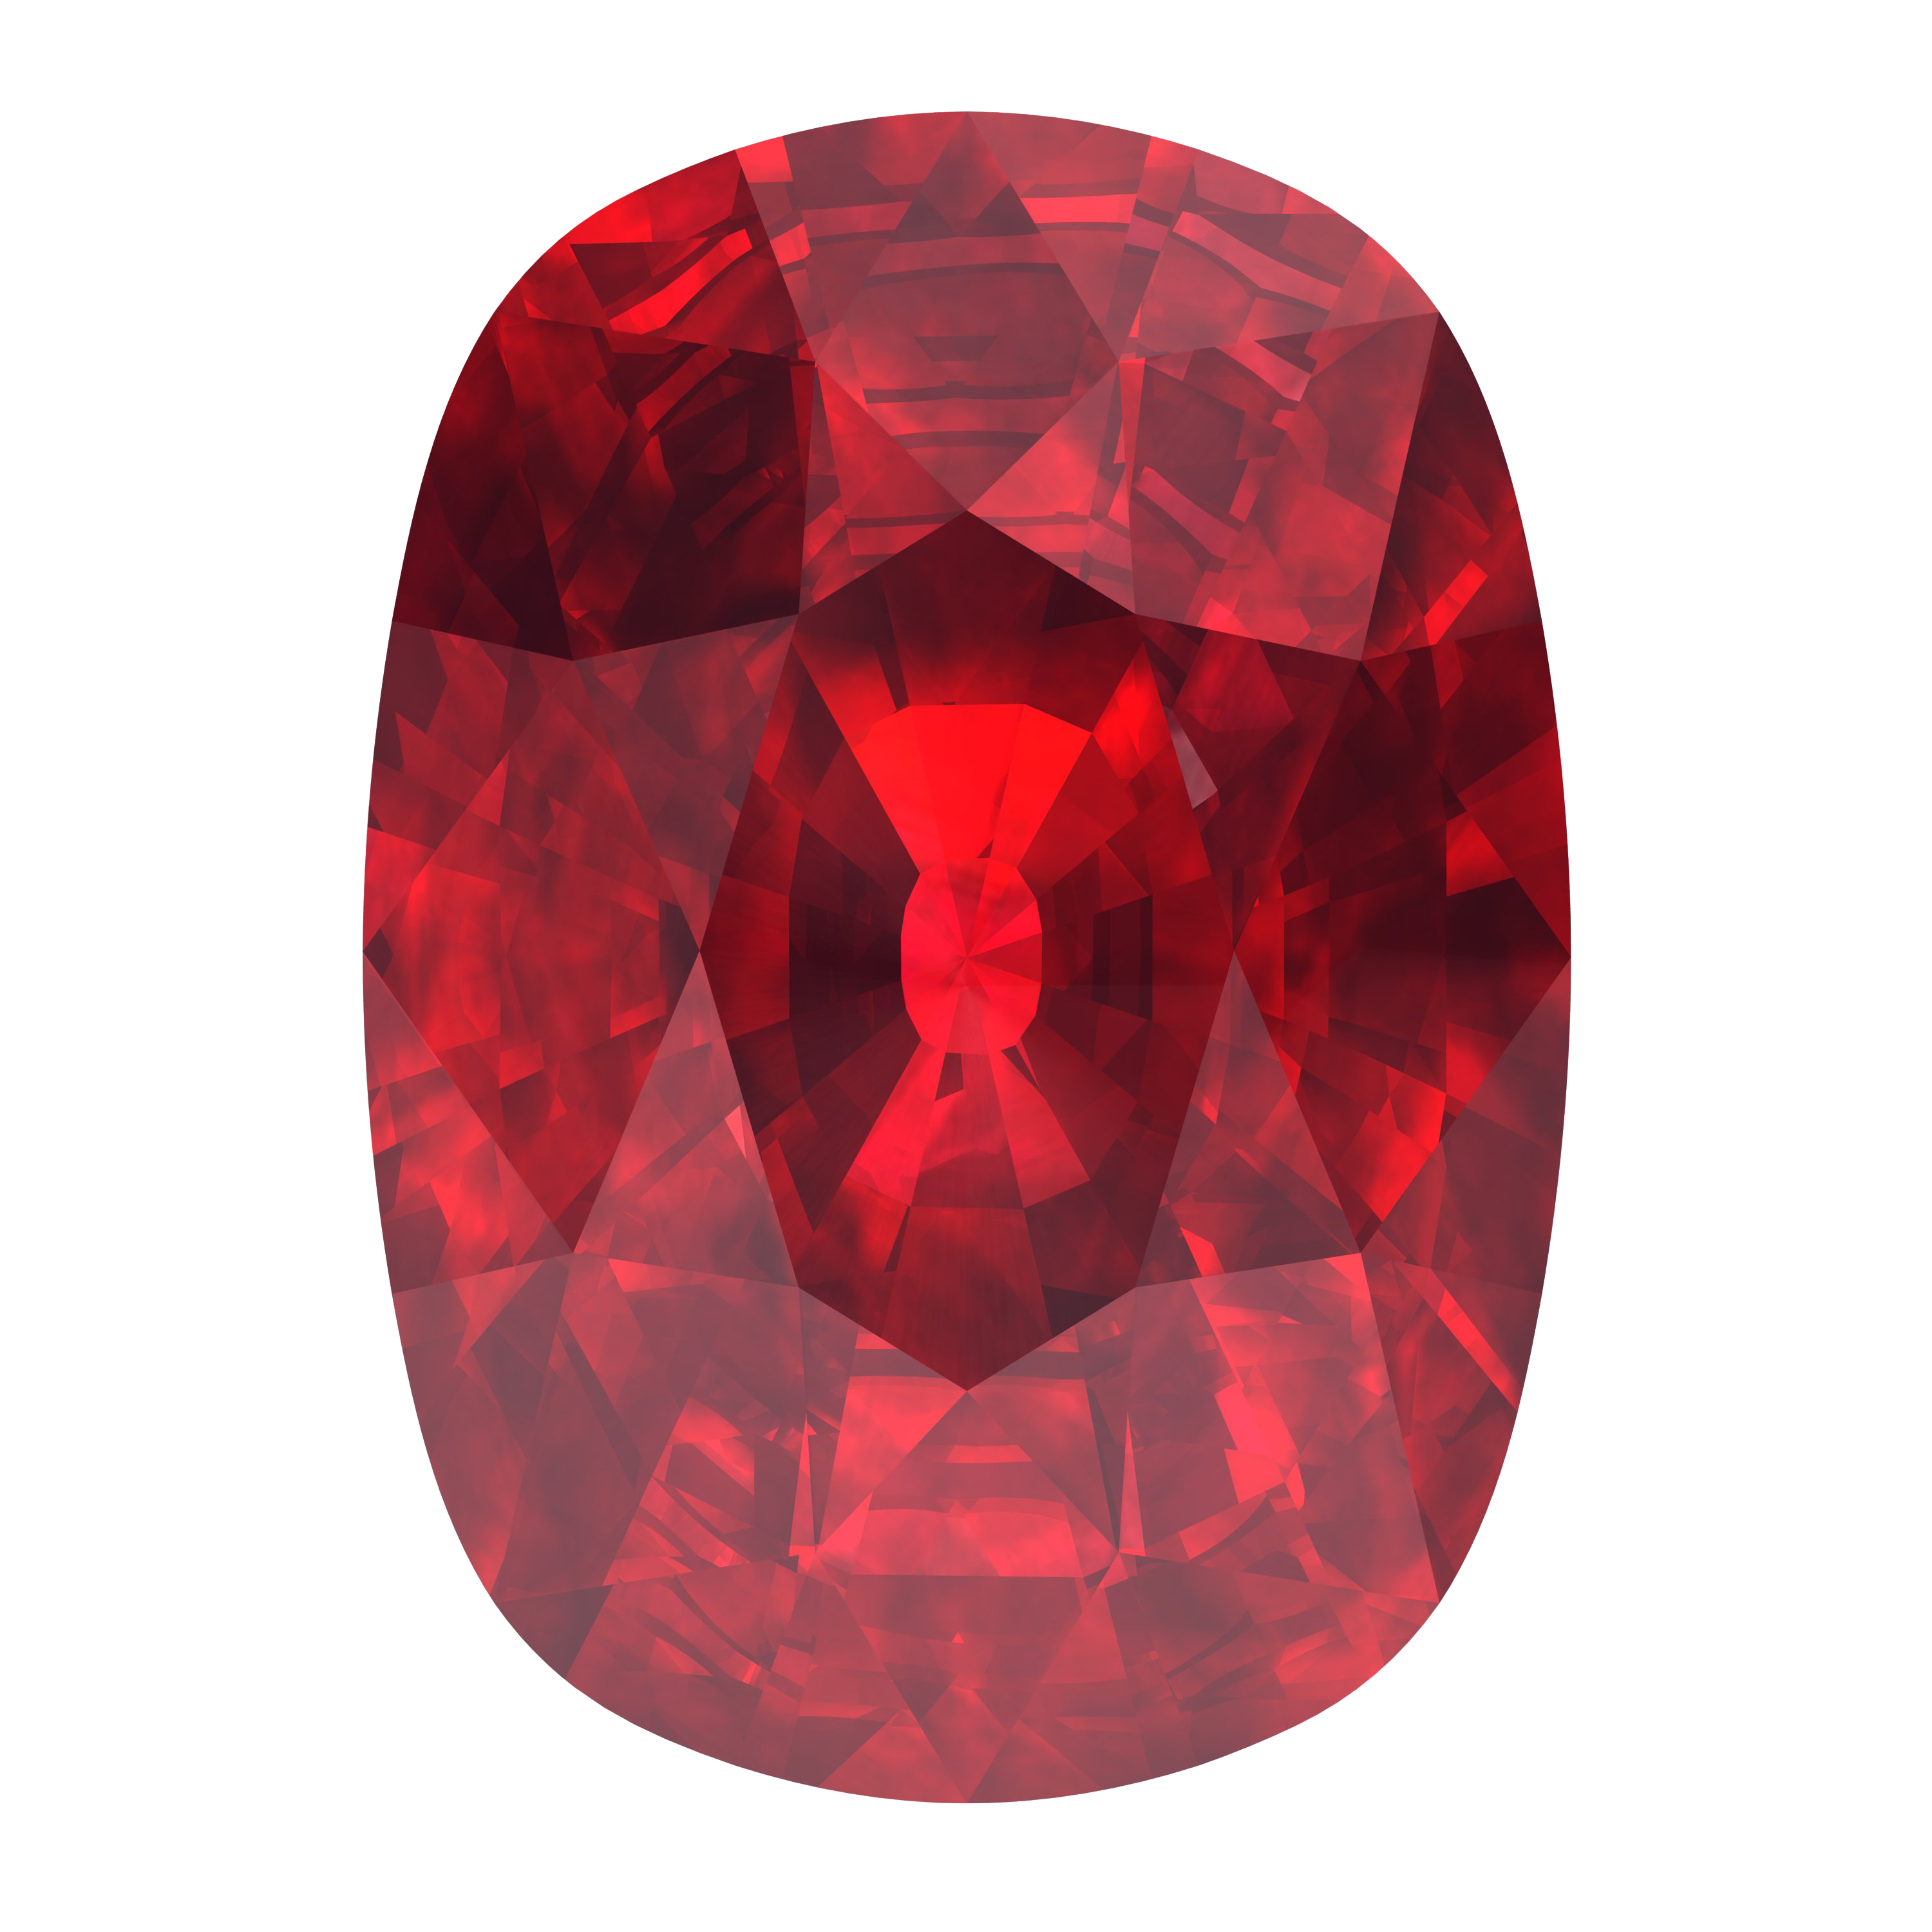 Le rubis pierre précieuse corindo rouge